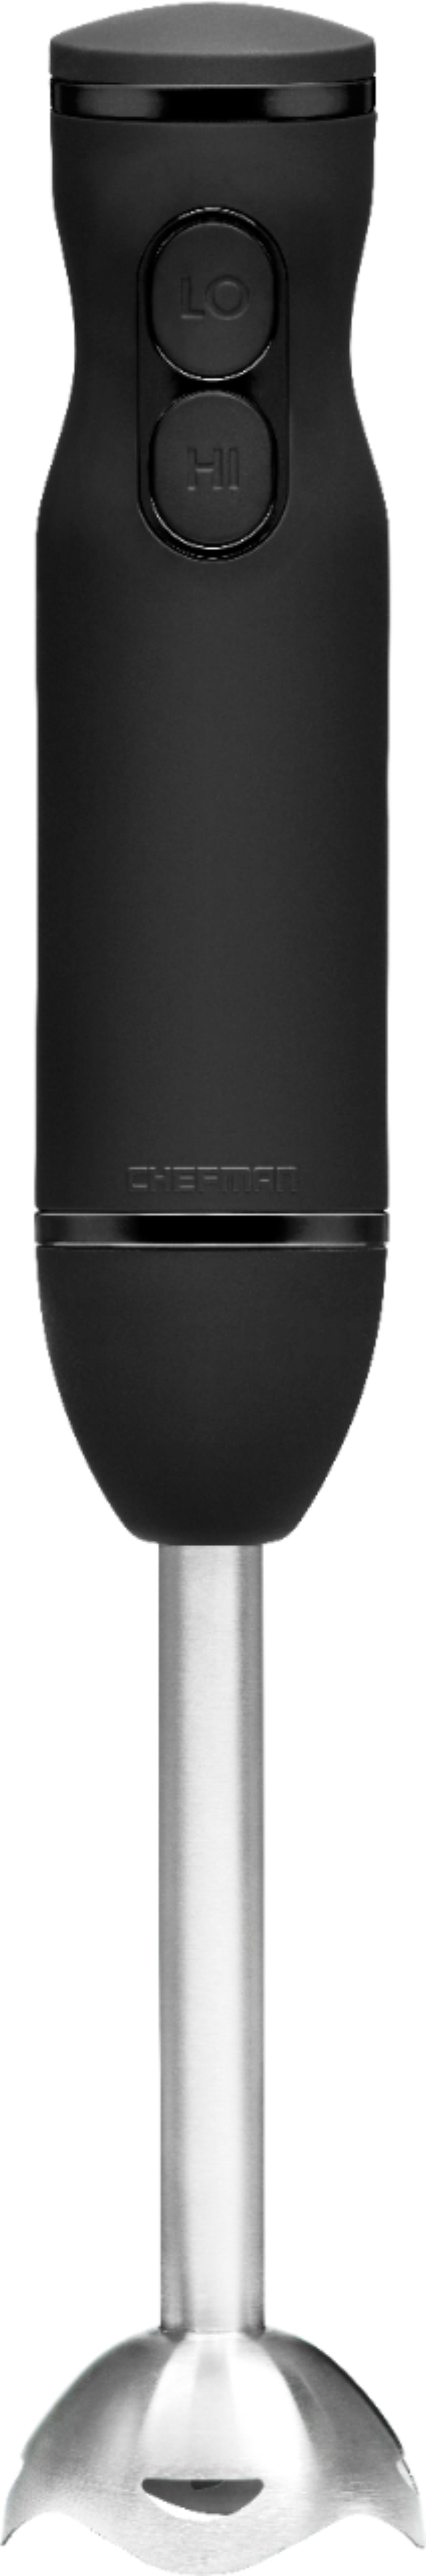 CHEFMAN Cordless Power Portable Immersion Blender & CHEFMAN Cordless Hand  Mixer